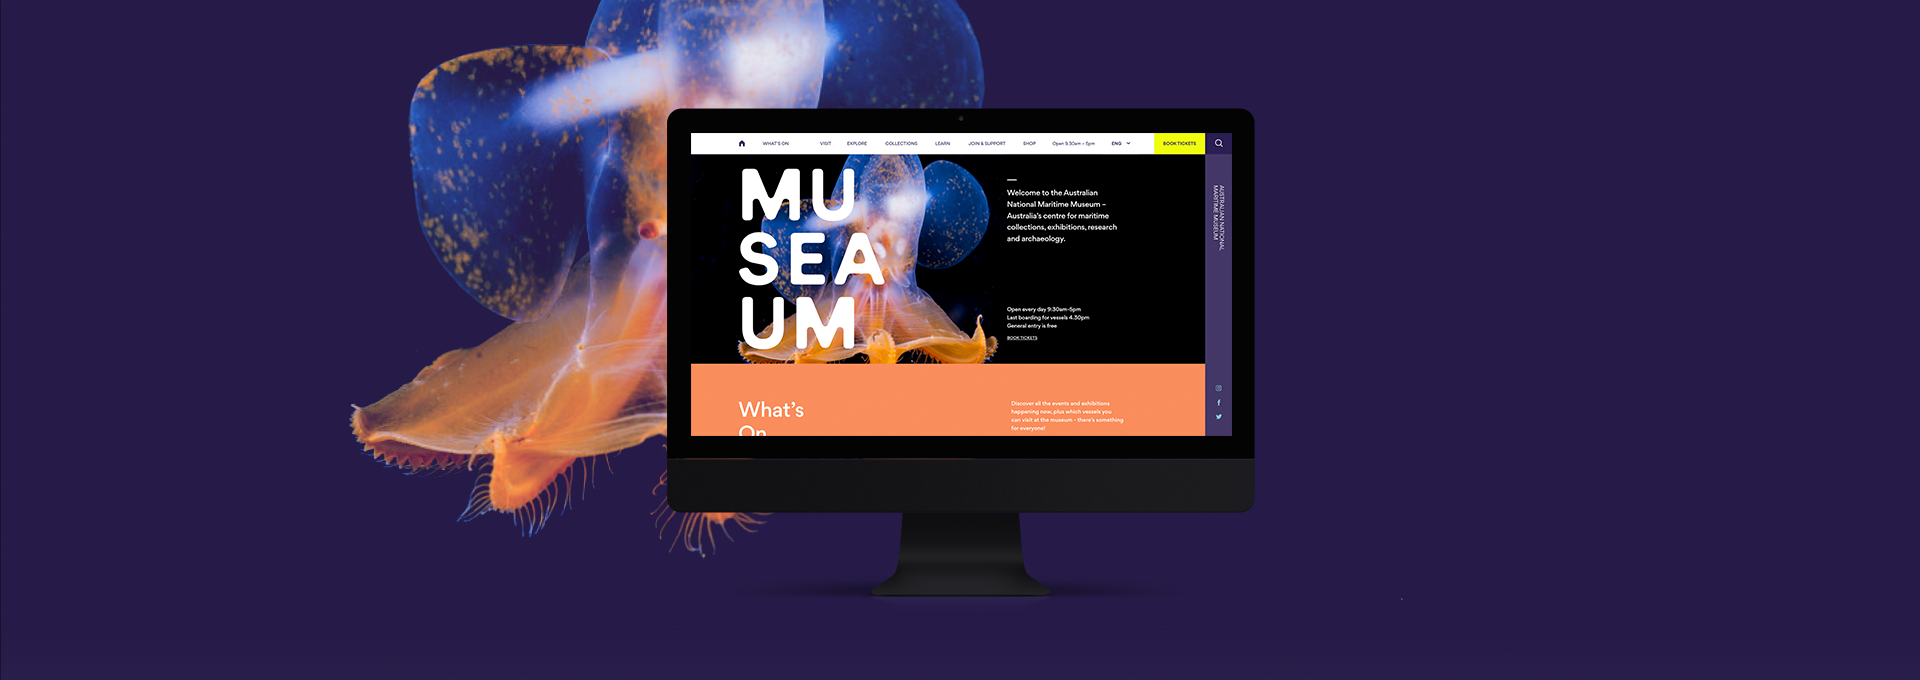 australian national maritime museum